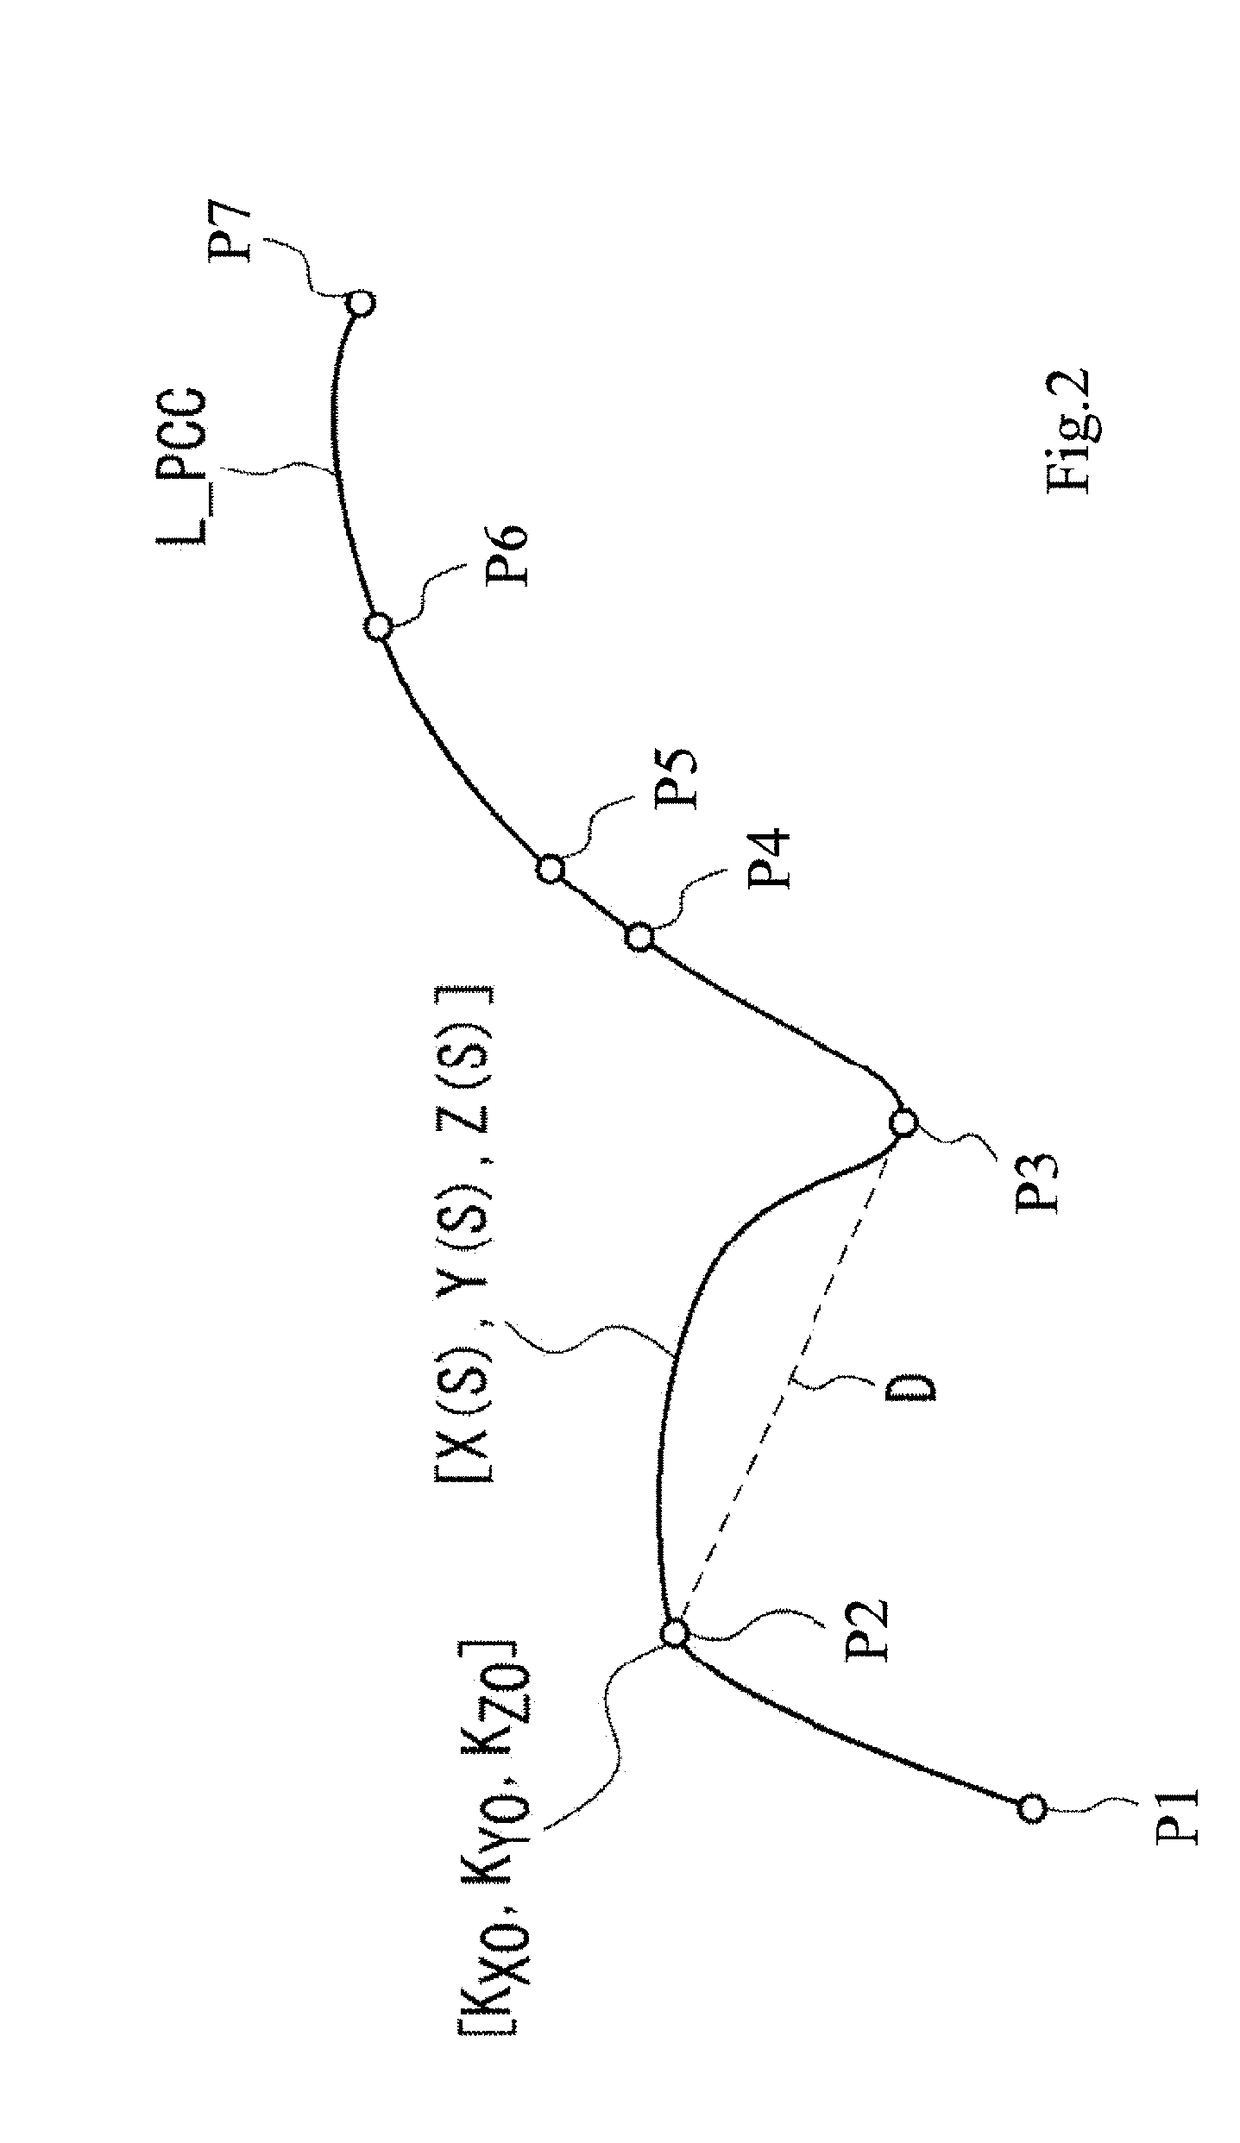 Control method of shape measuring apparatus